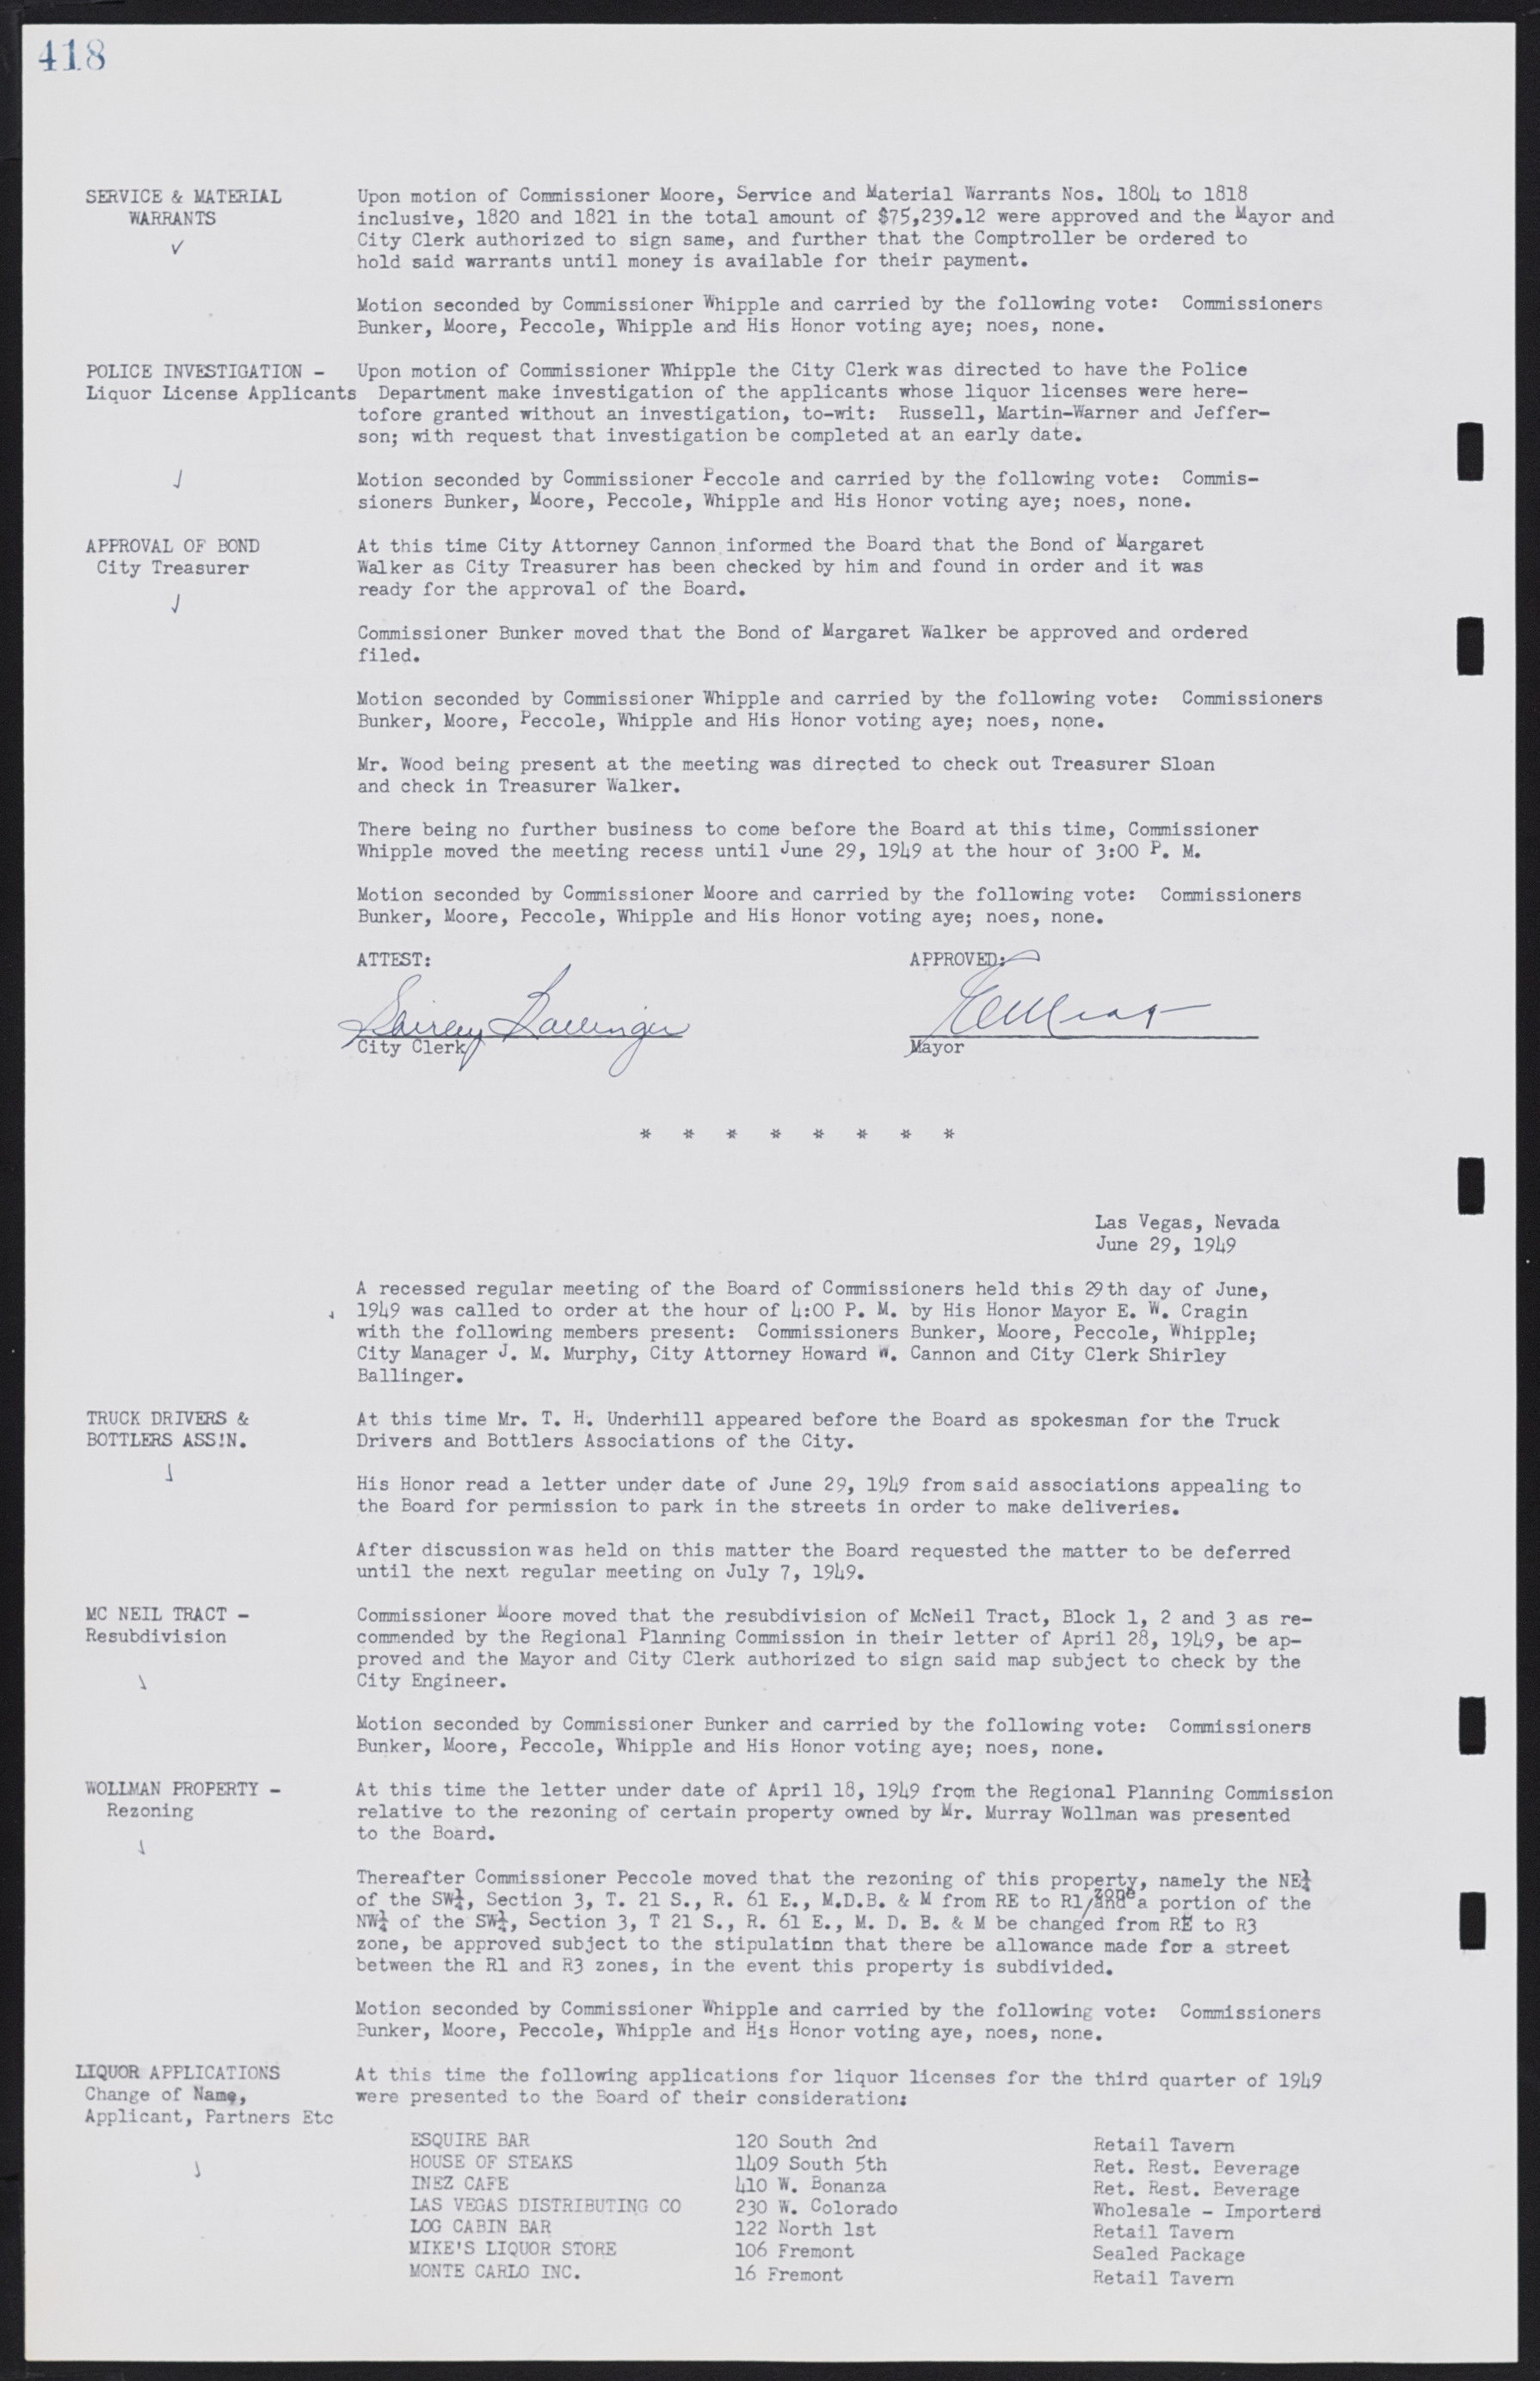 Las Vegas City Commission Minutes, January 7, 1947 to October 26, 1949, lvc000006-448